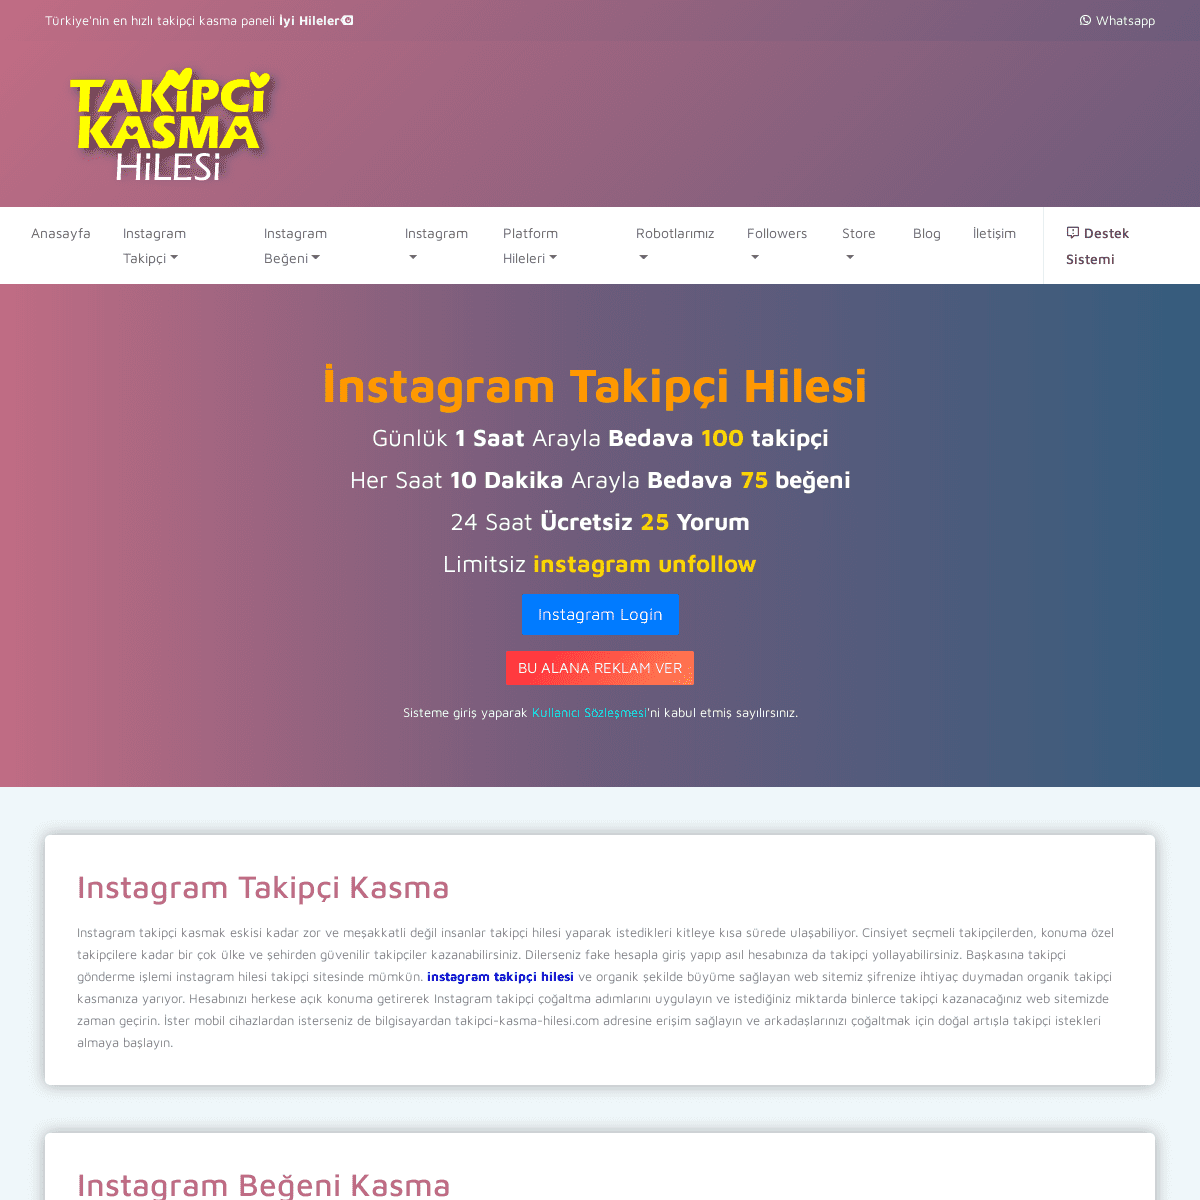 A complete backup of https://takipci-kasma-hilesi.com